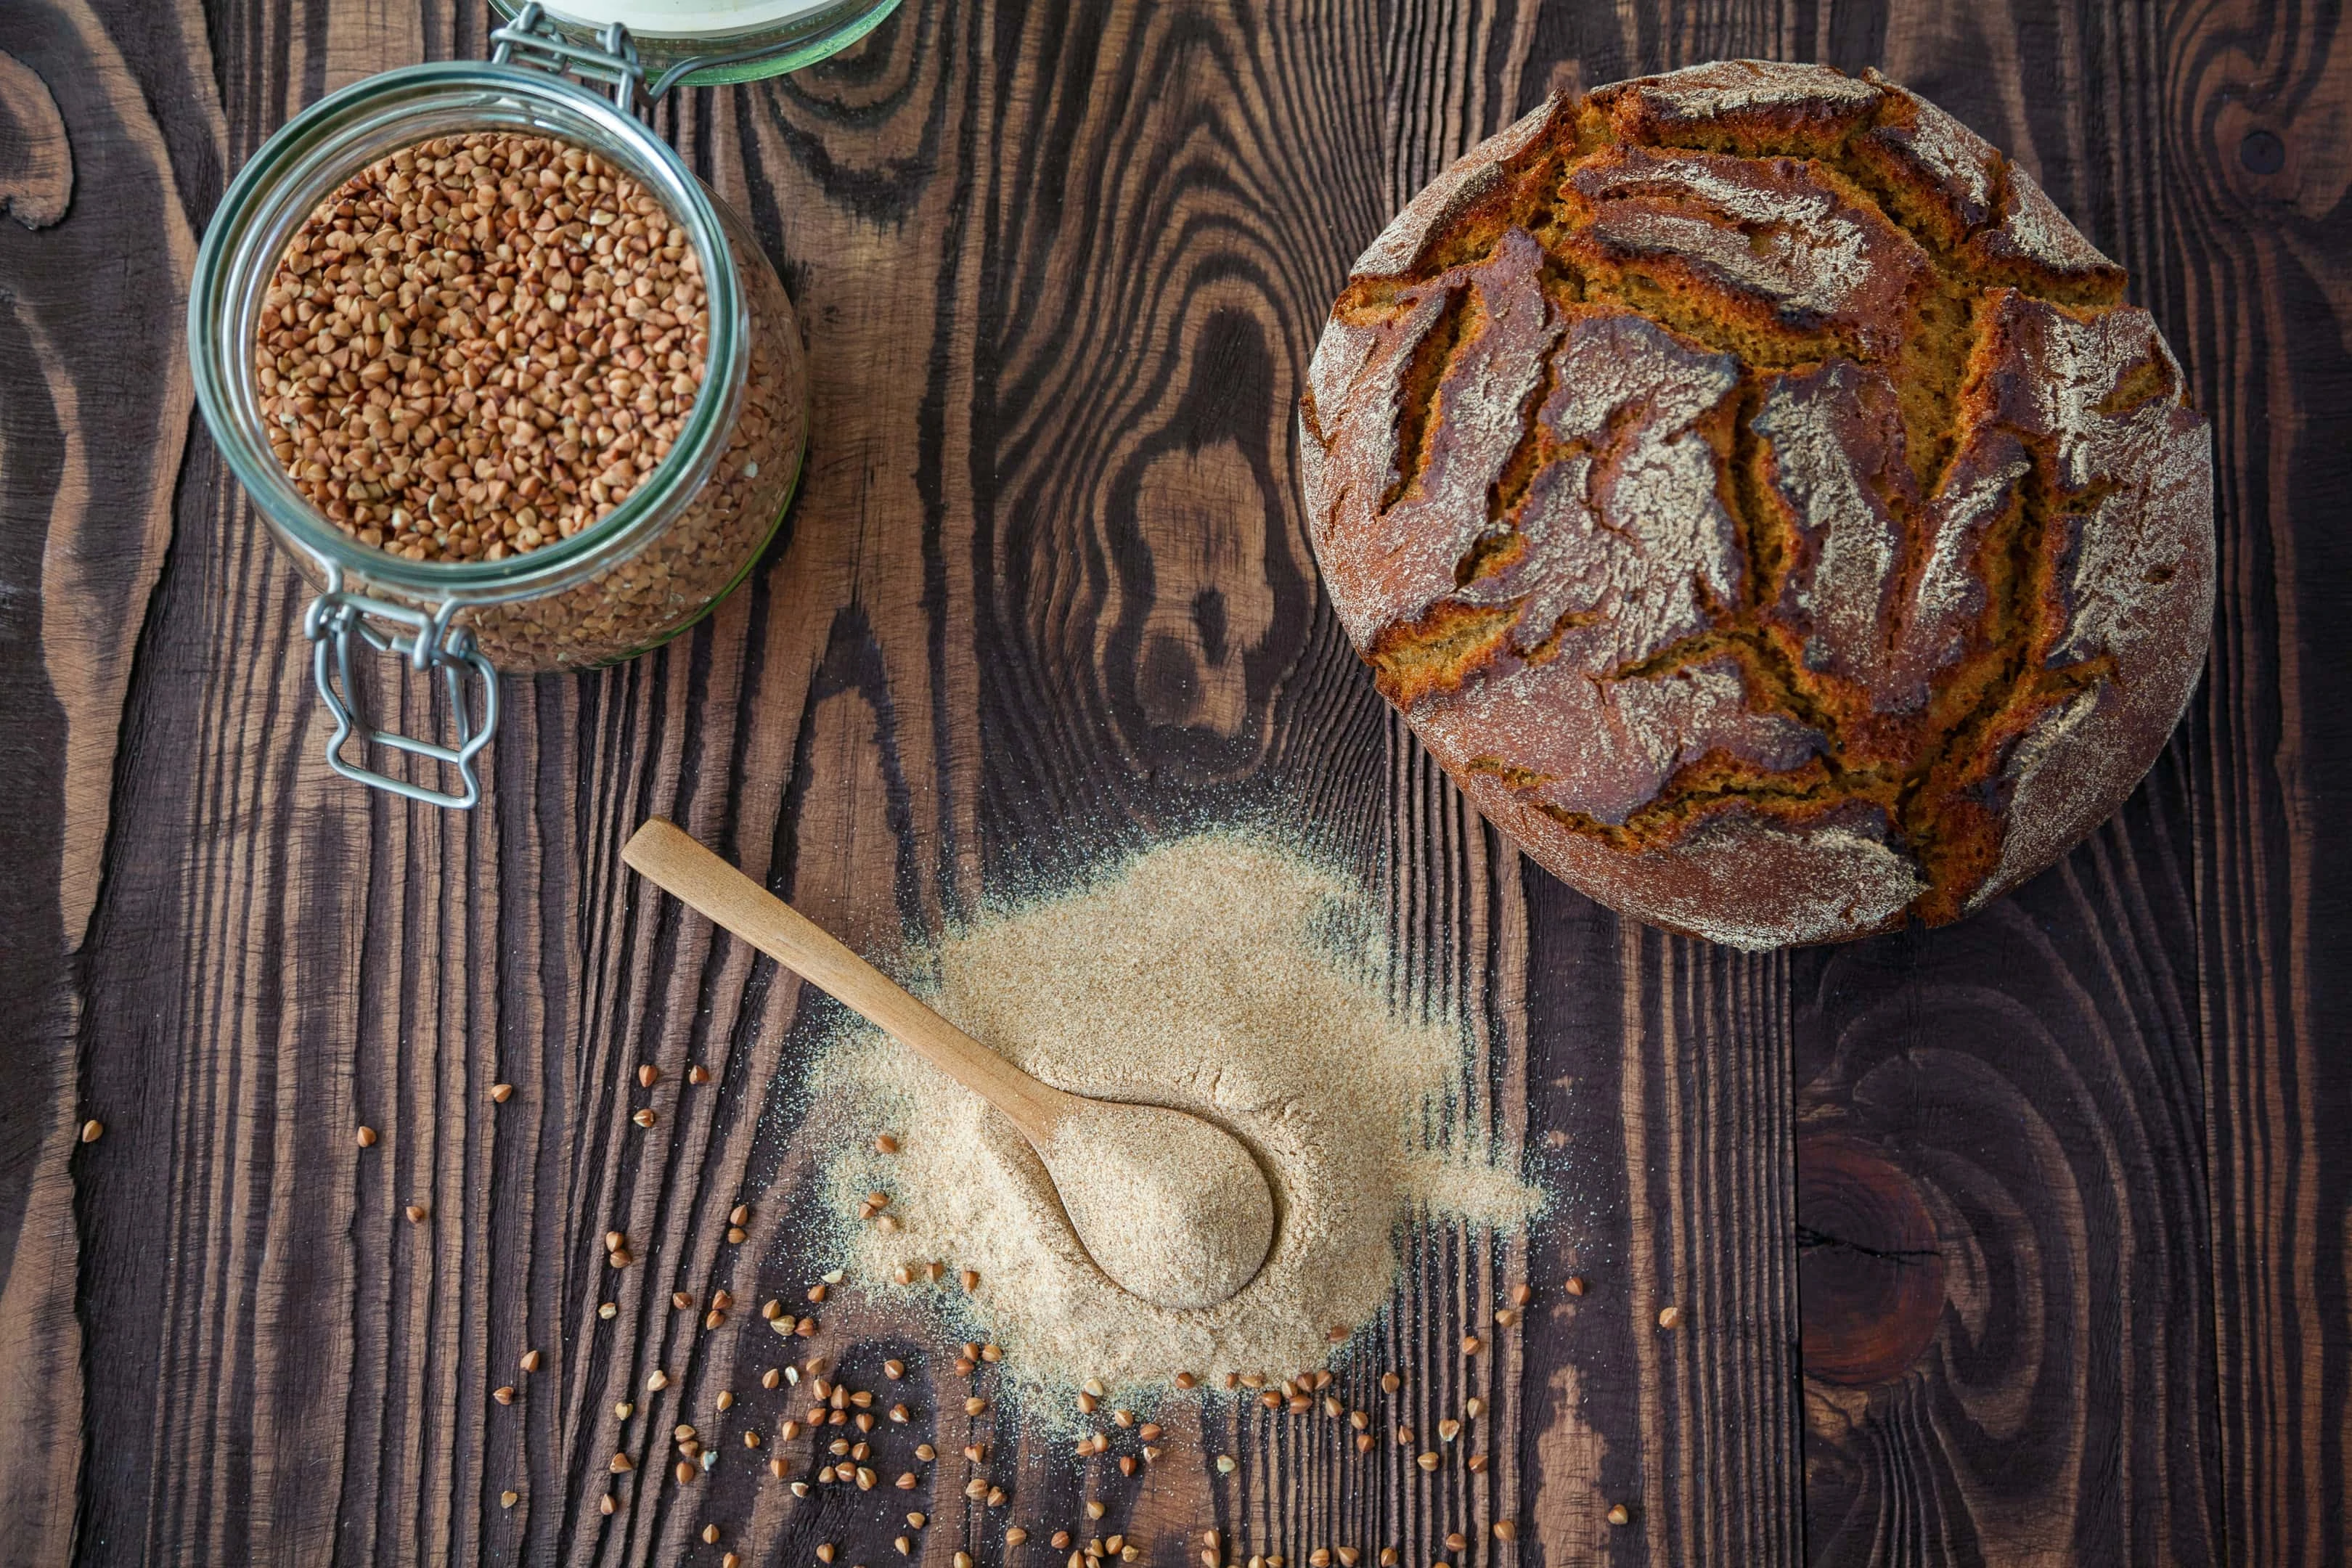 Buckwheat flour and buckwheat grains and buckwheat bread.